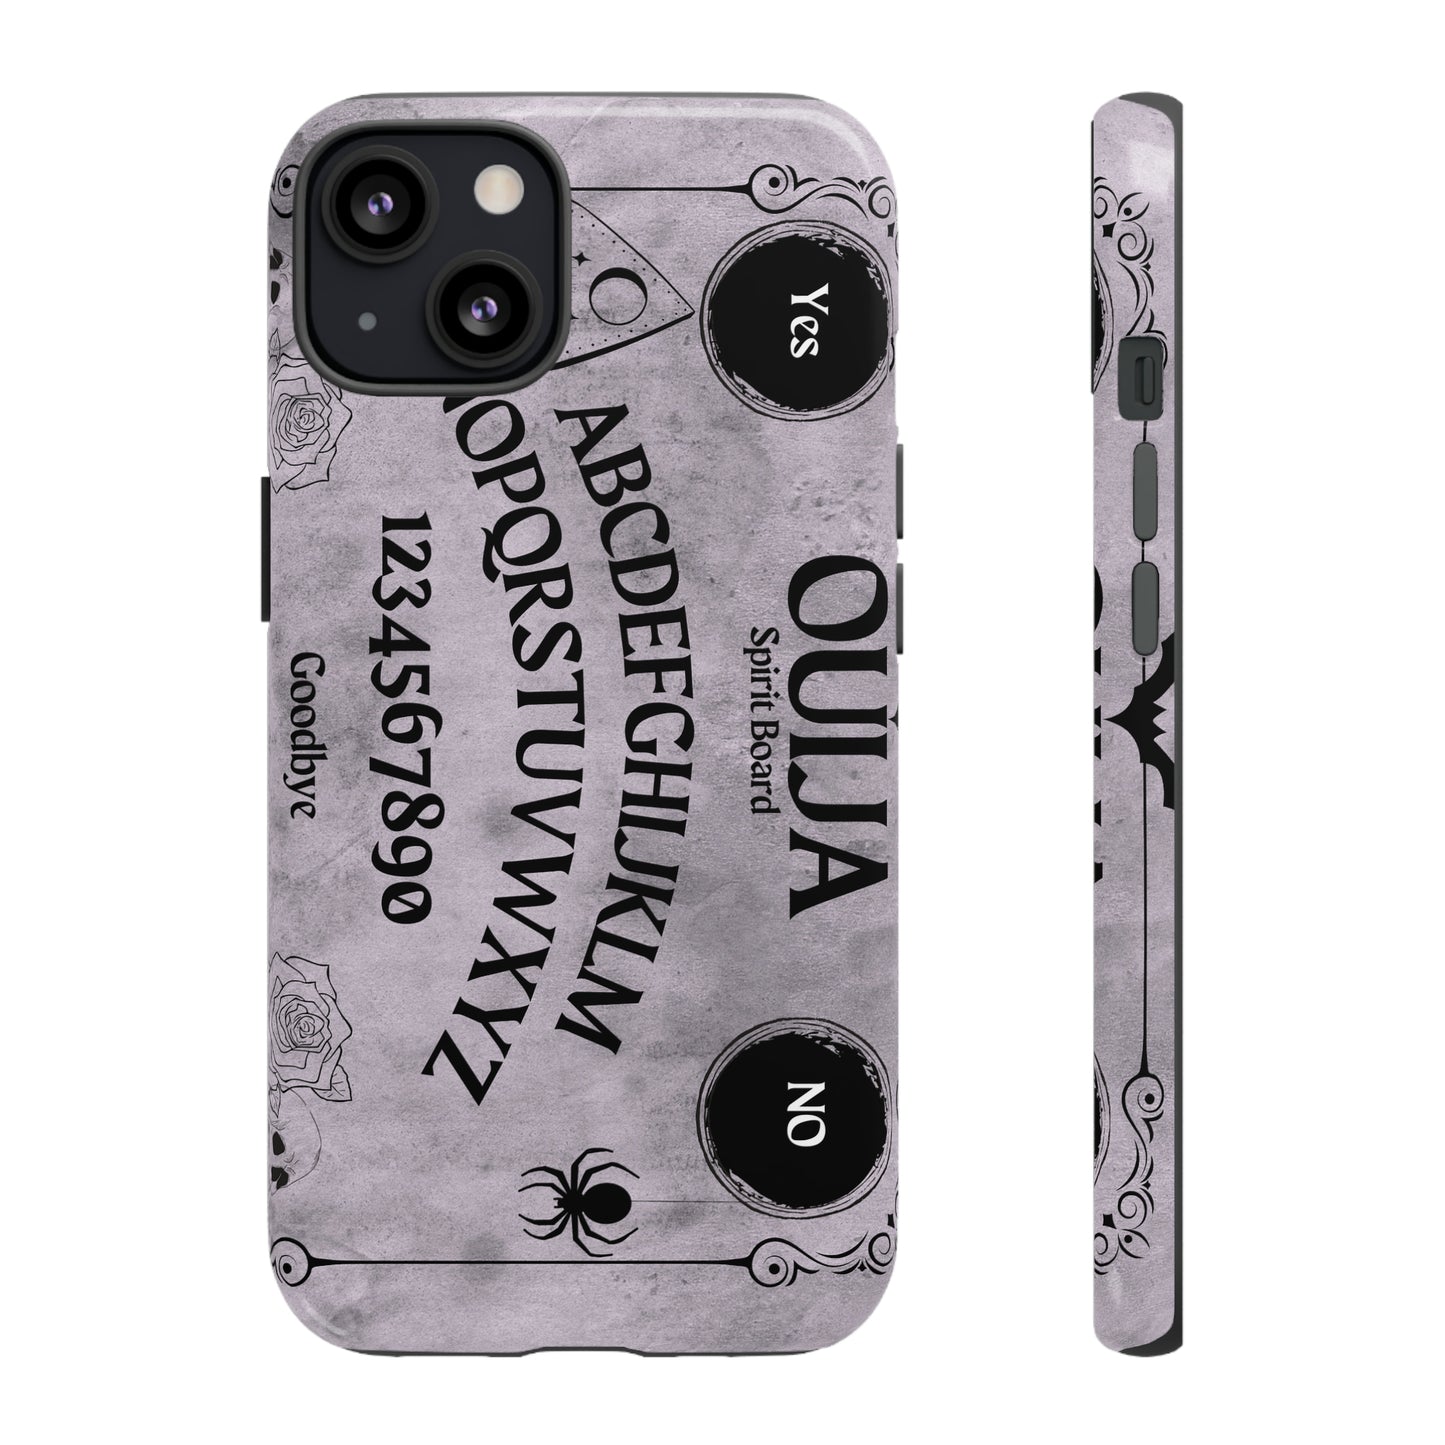 Ouija Board Tough Phone Cases For Samsung iPhone GooglePhone CaseVTZdesignsiPhone 13GlossyAccessoriesGlossyhalloween